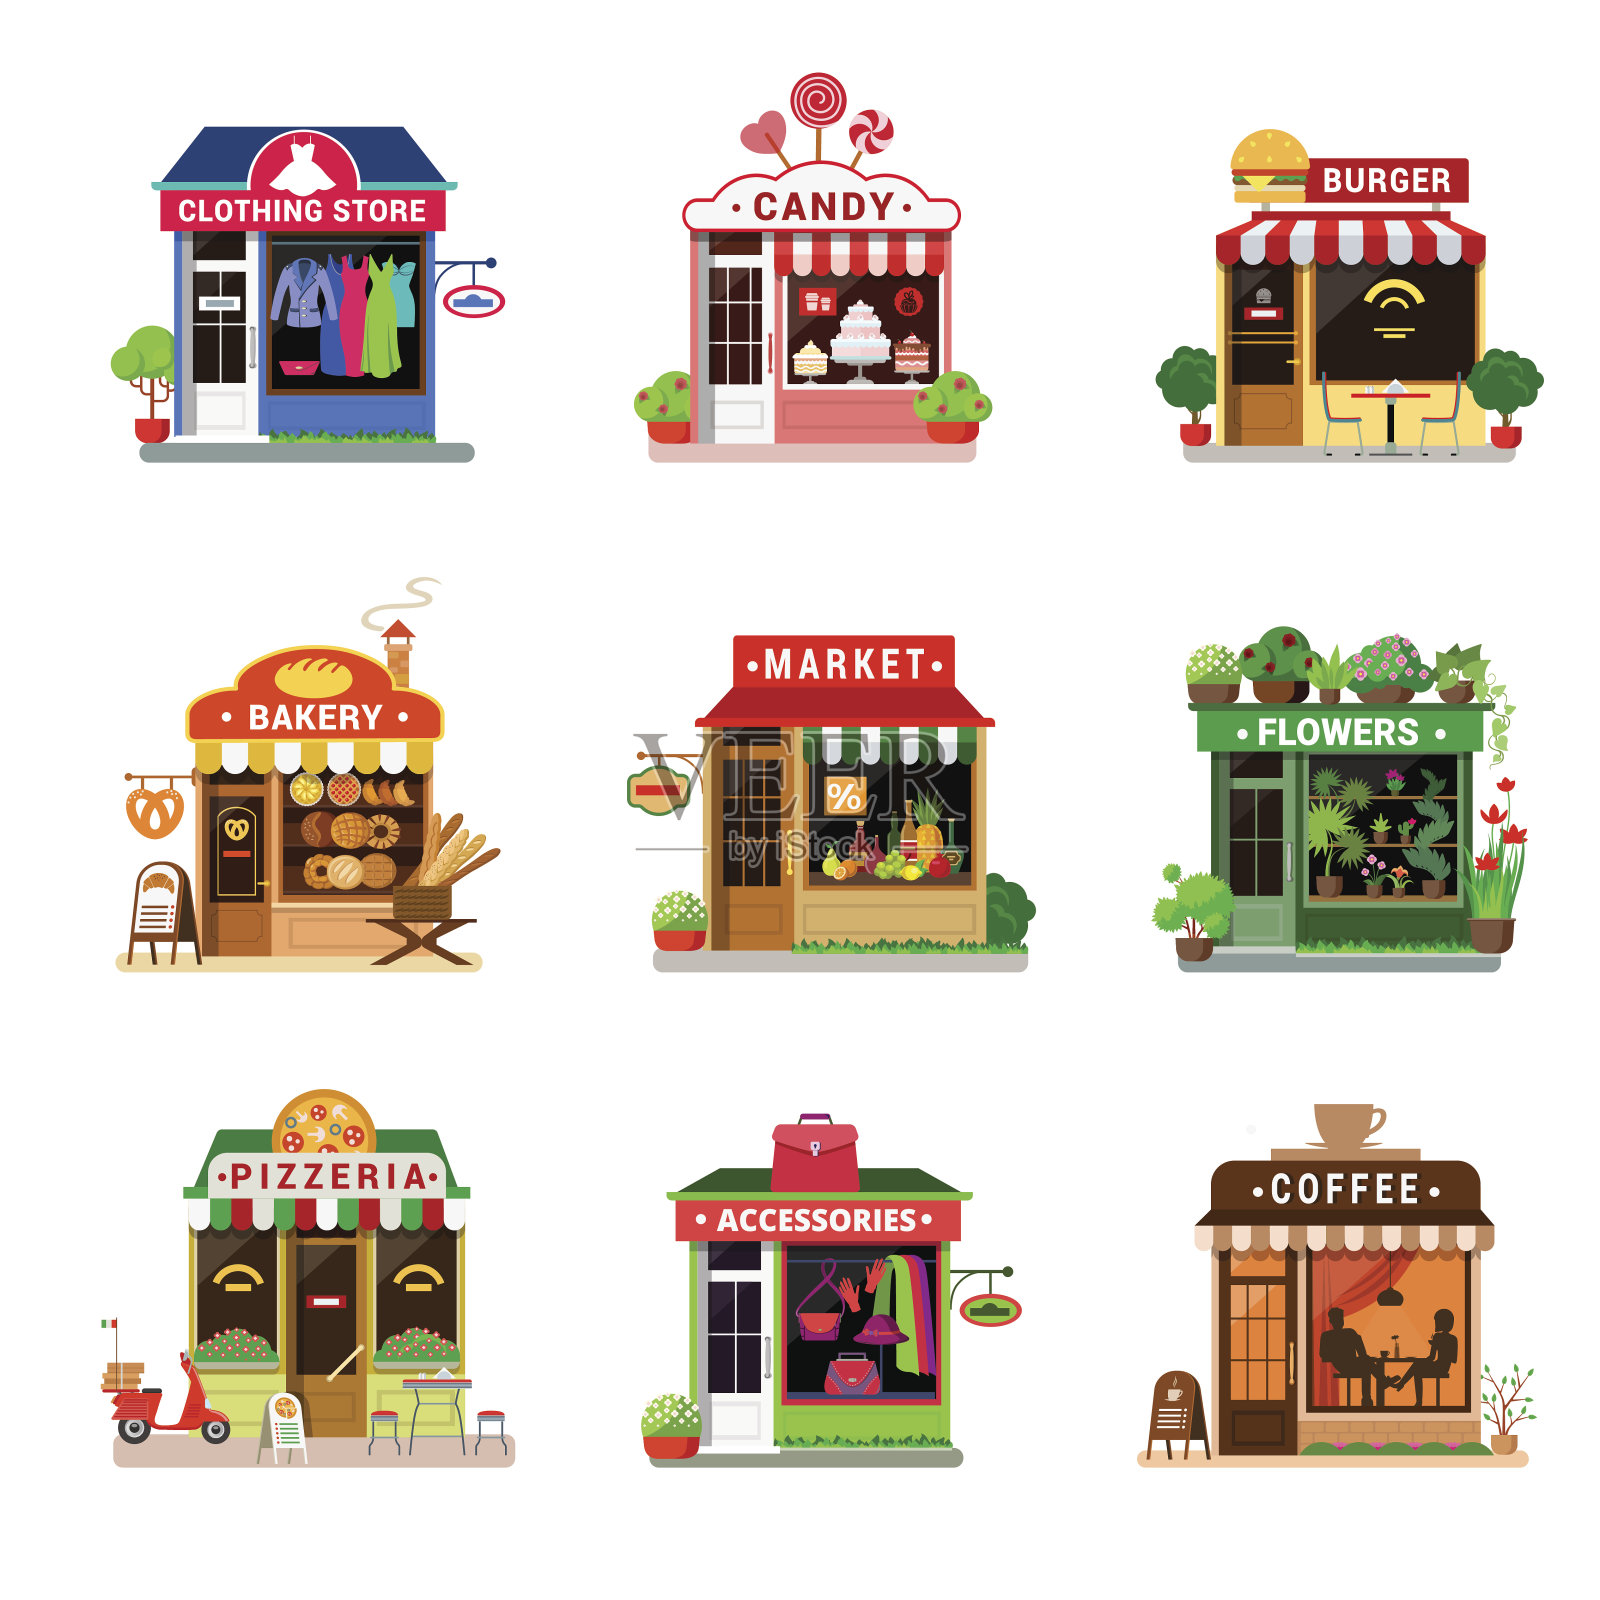 Flat style set tiny micro icon shop shop showcase front window entrance door web app game vector。服装，时尚，糖果，汉堡，面包店，杂货店，市场，花，披萨，披萨配件，咖啡，咖啡馆。插画图片素材